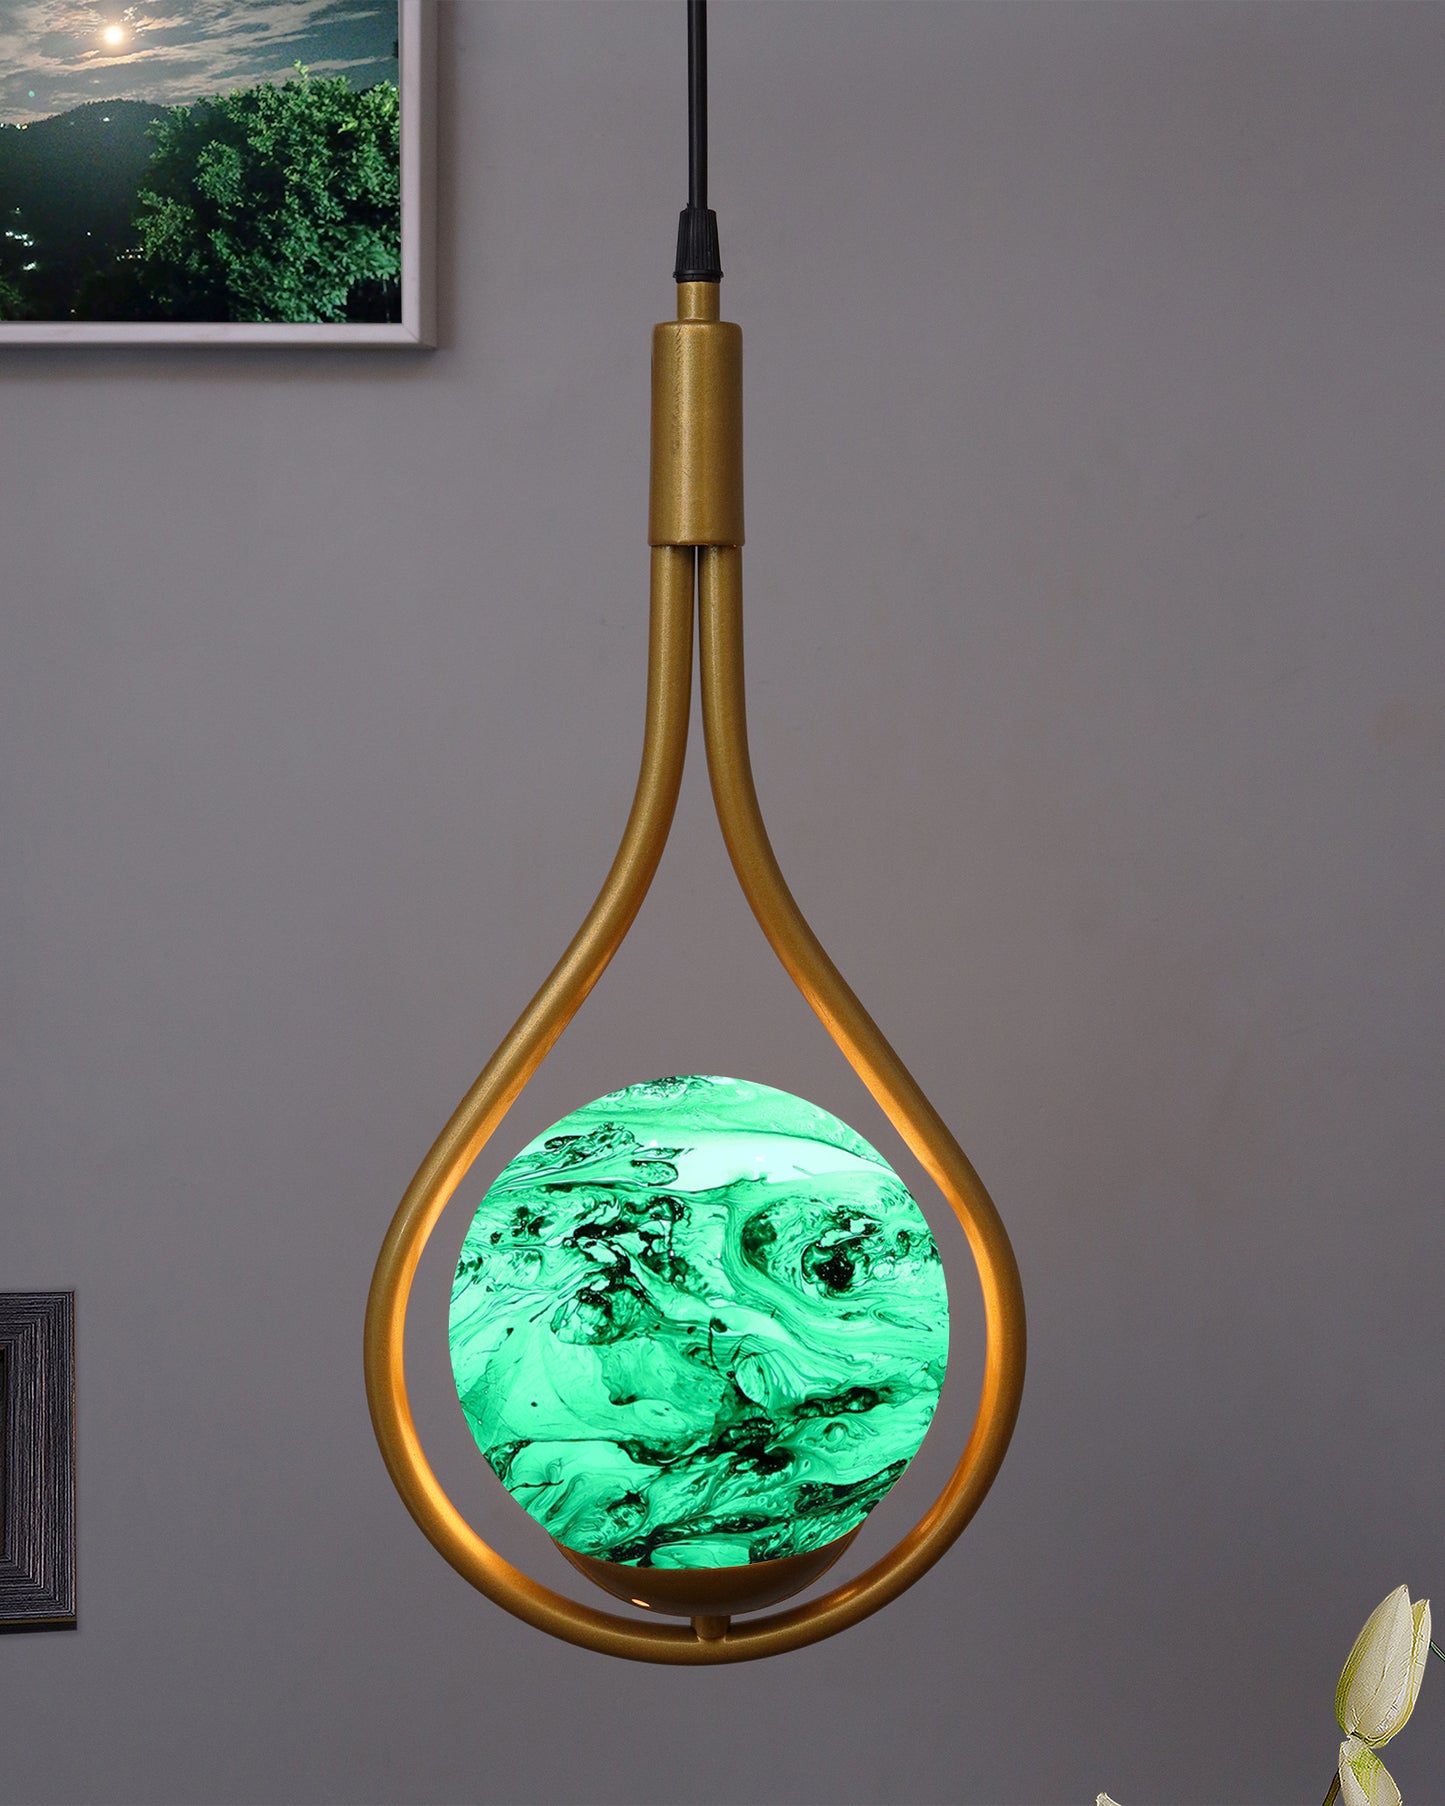 Mid Century Modern Golden Light Chandelier , Planet Series Frosted Glass Globe Lampshade Pendant Indoor Hanging Light Fixture, Water Drop